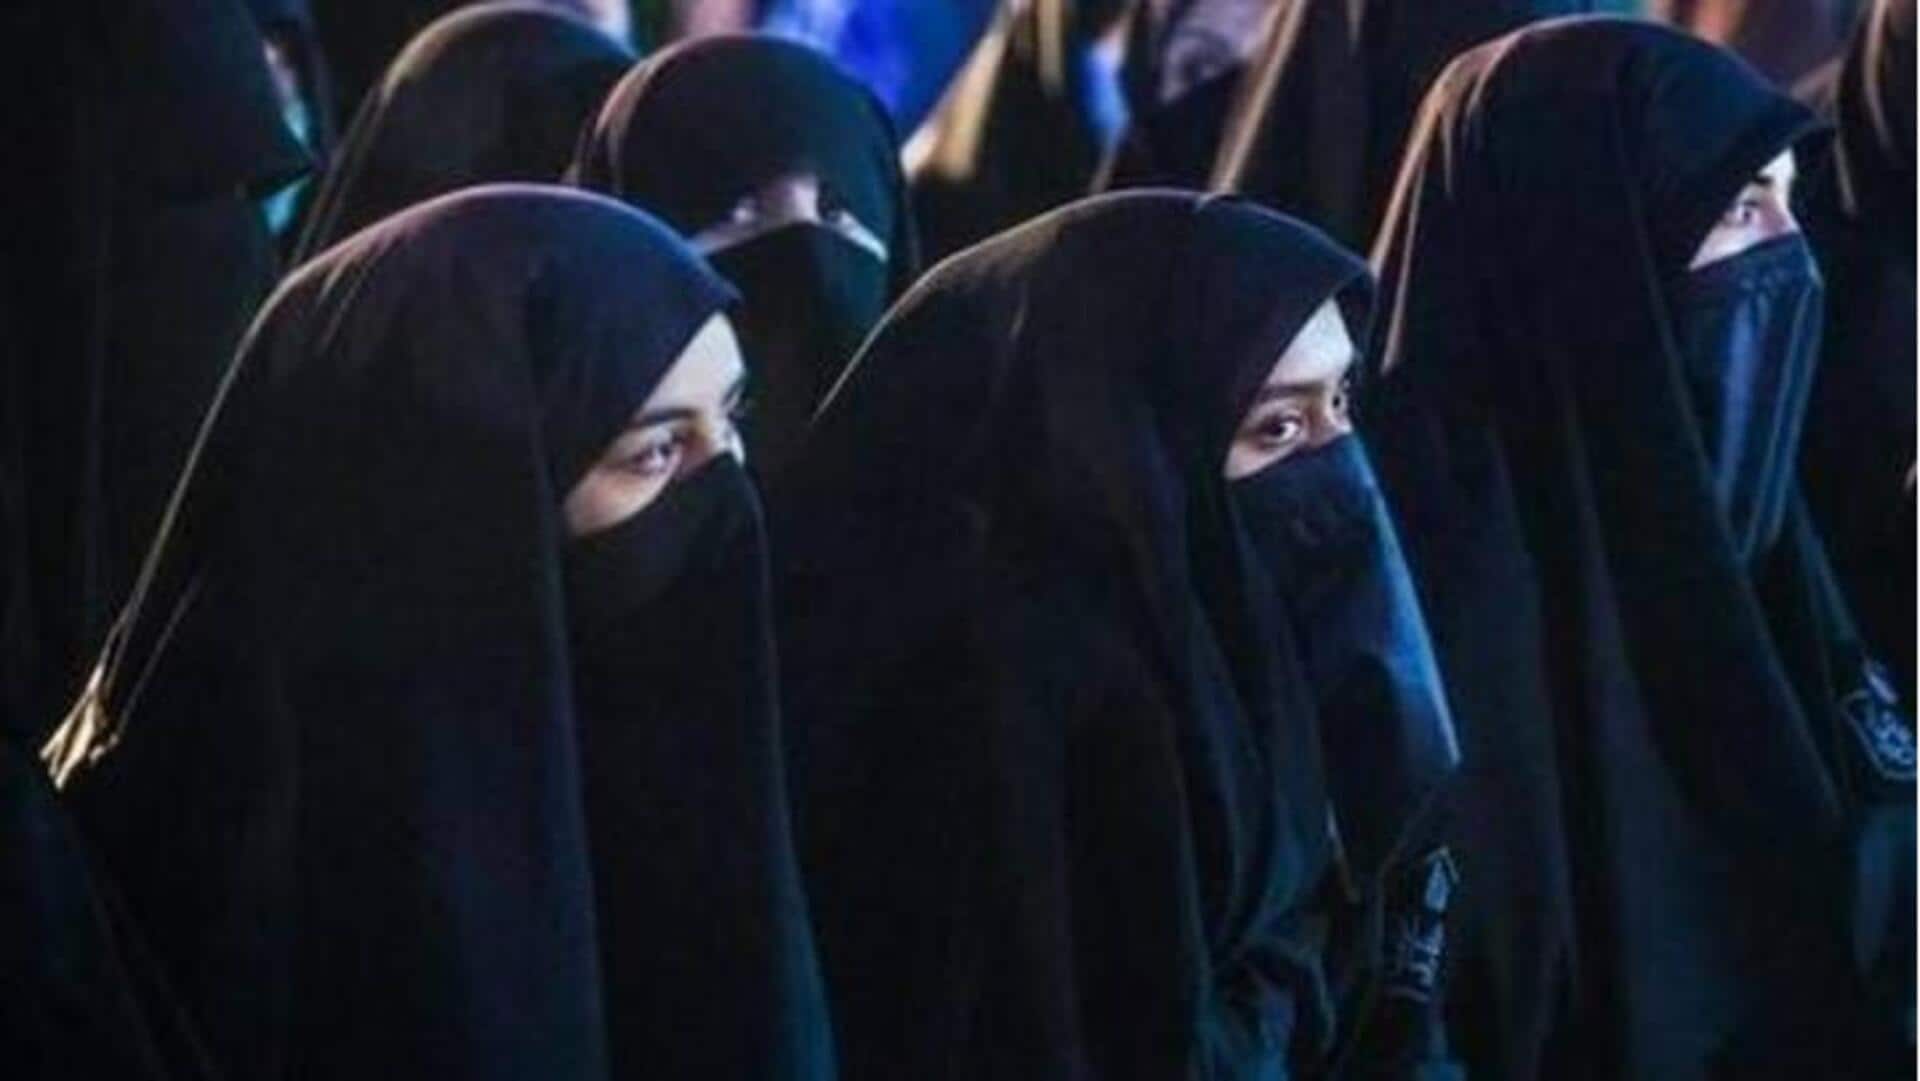 Hijab ban row: కర్ణాటకలో నేటి నుంచి హిజాబ్ ధరించొచ్చు.. సిద్ధరామయ్య ప్రభుత్వం ఉత్తర్వులు 